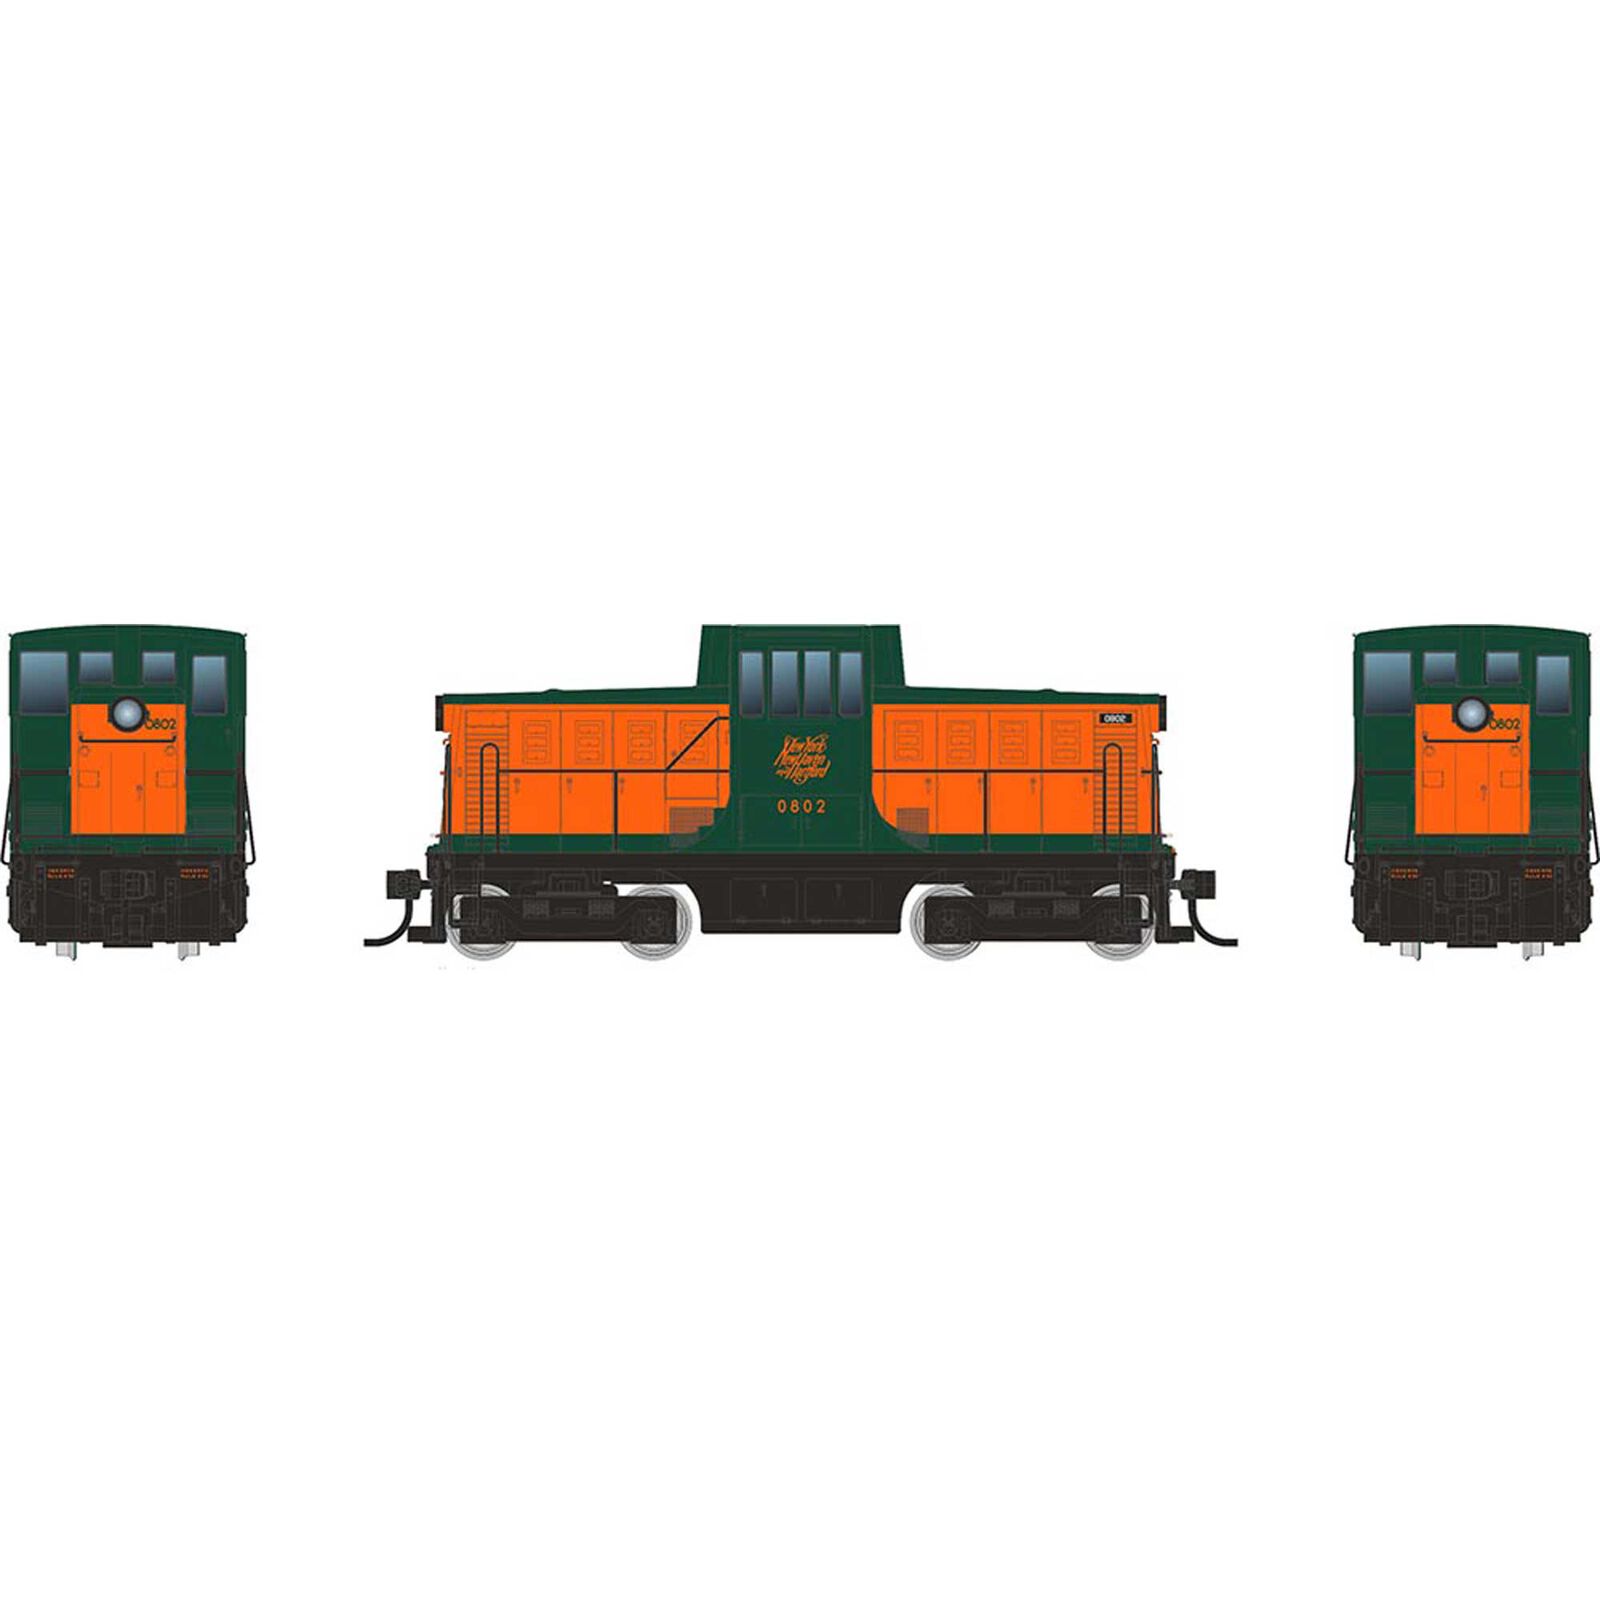 HO GE 44 Tonner Switcher Locomotive with DCC & Sound, NH Warm Orange #0802